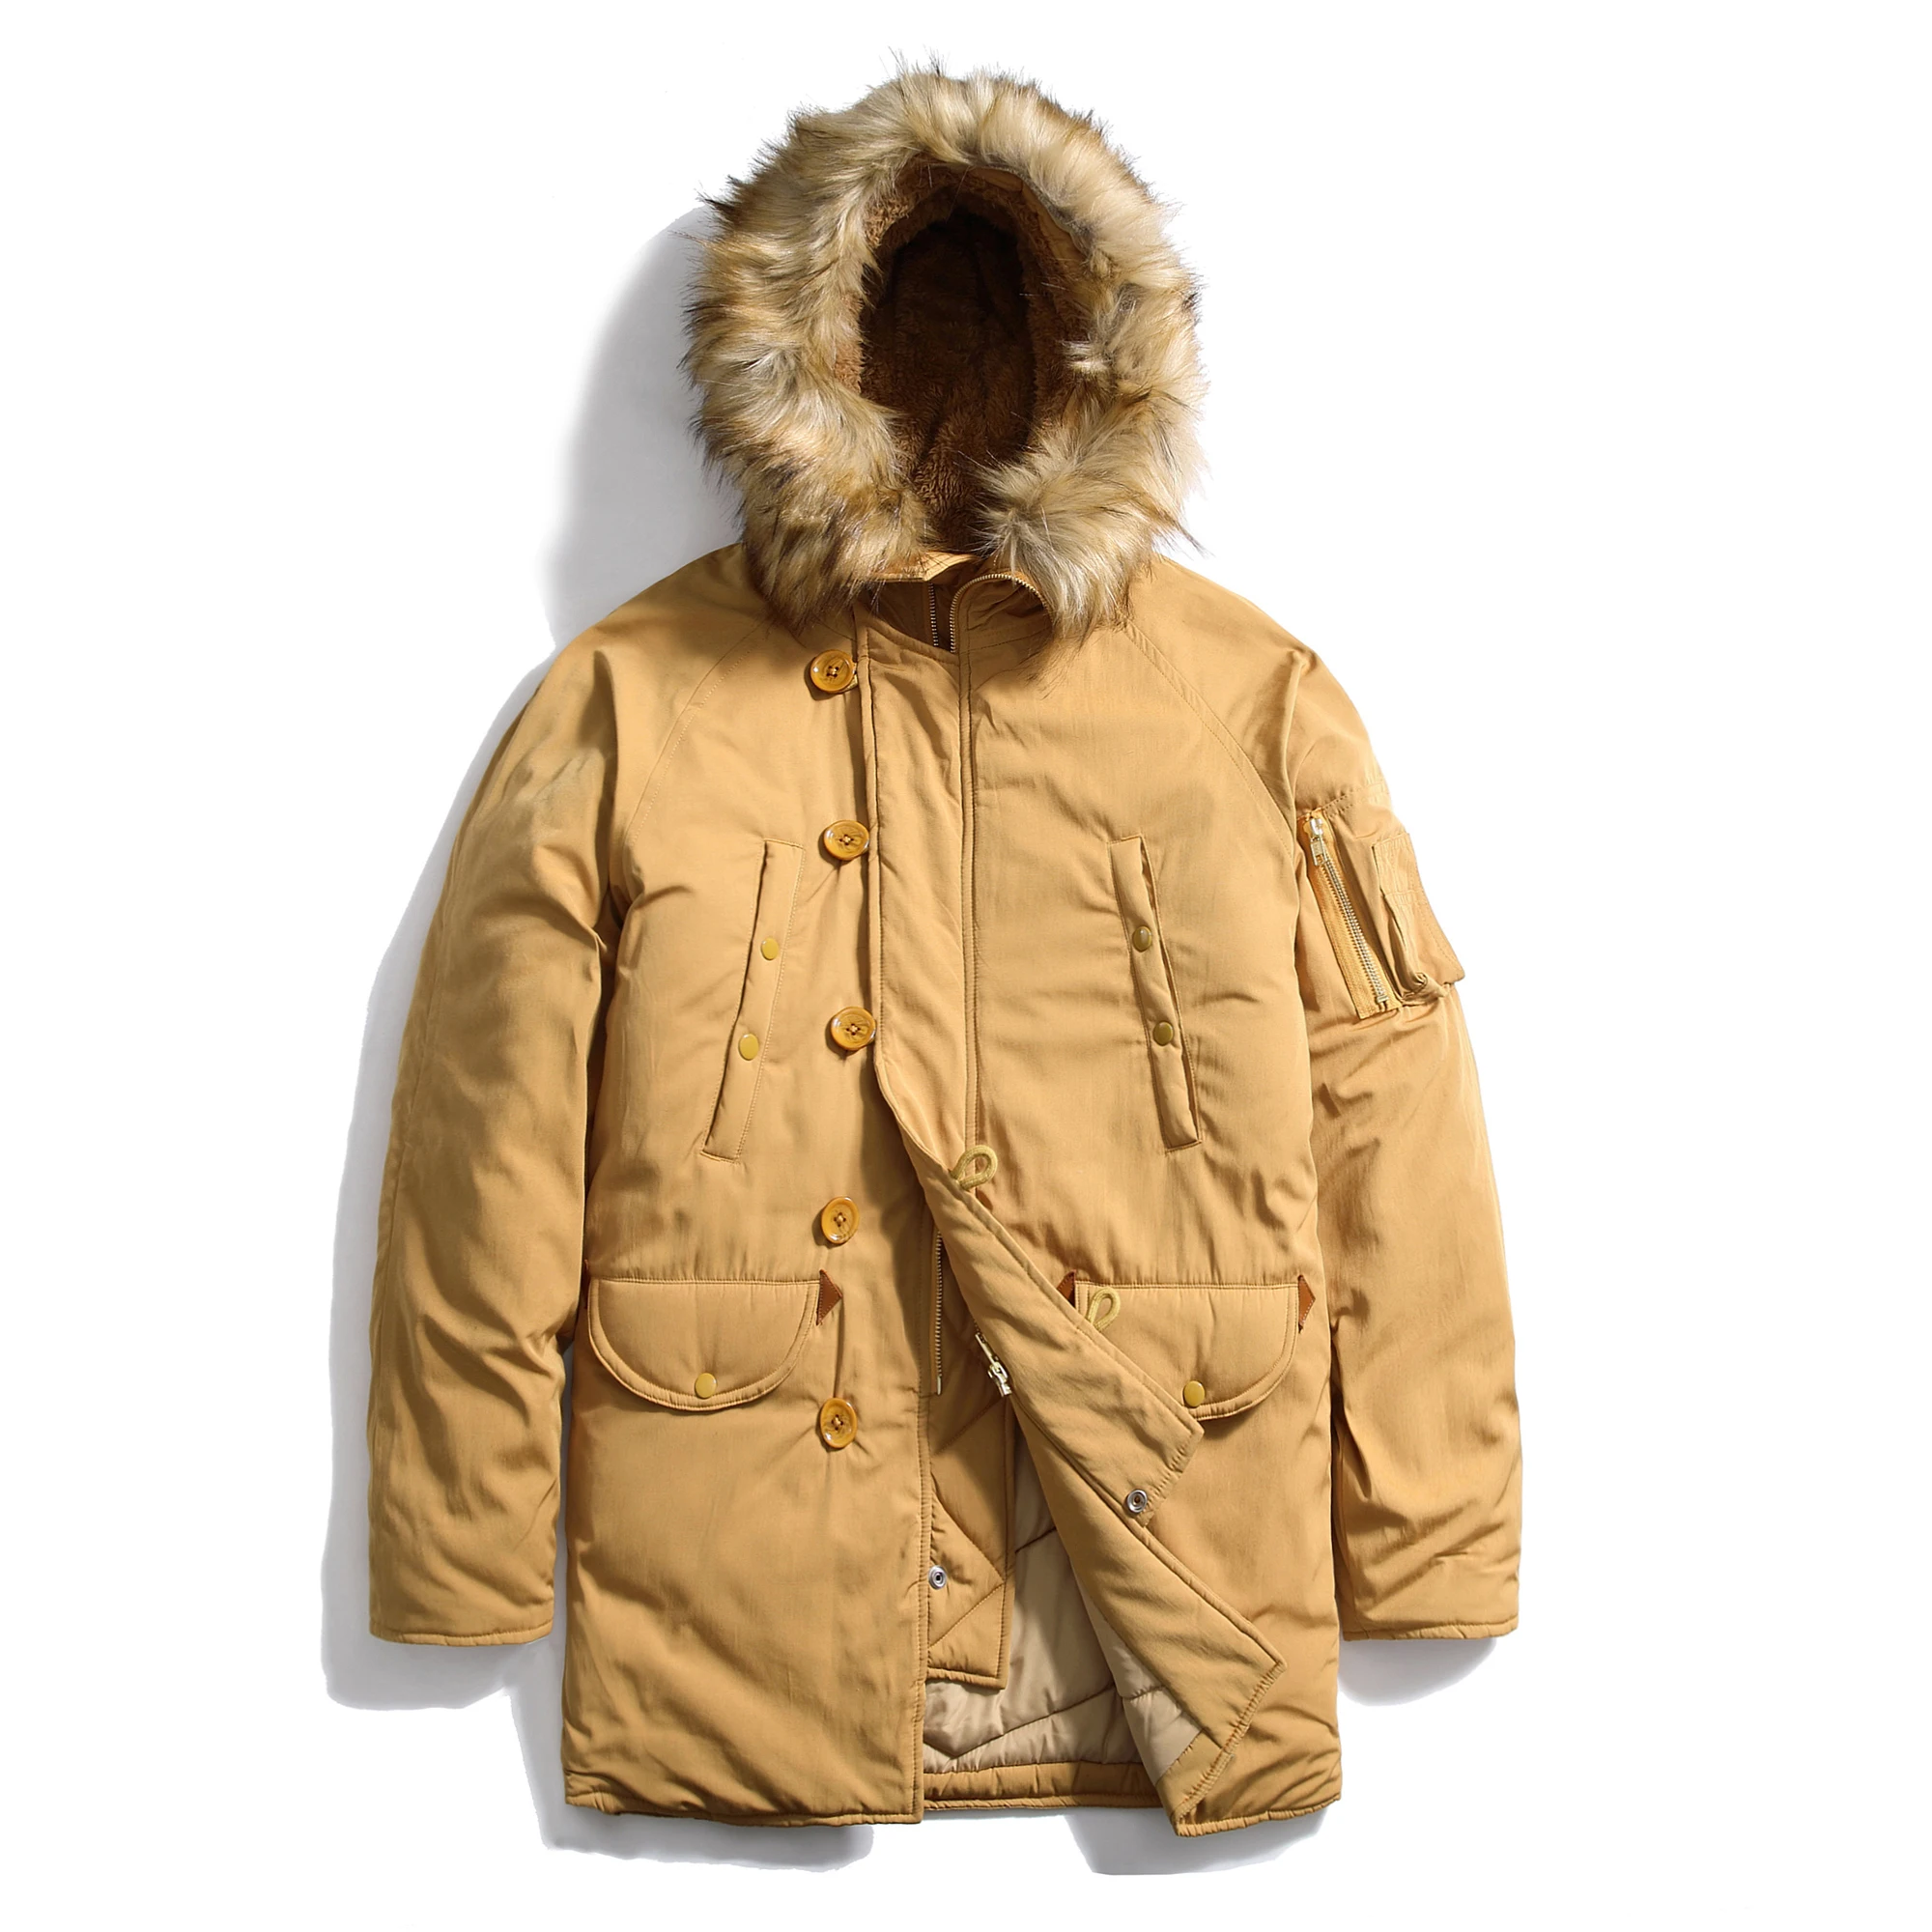 SauceZhan N3B JACKET Winter Jacket Men N 3B USA Flying Parka Bomber Jacket  Long Hooded Jacket Fur Collar Cotton Thick Coat|Parkas| - AliExpress